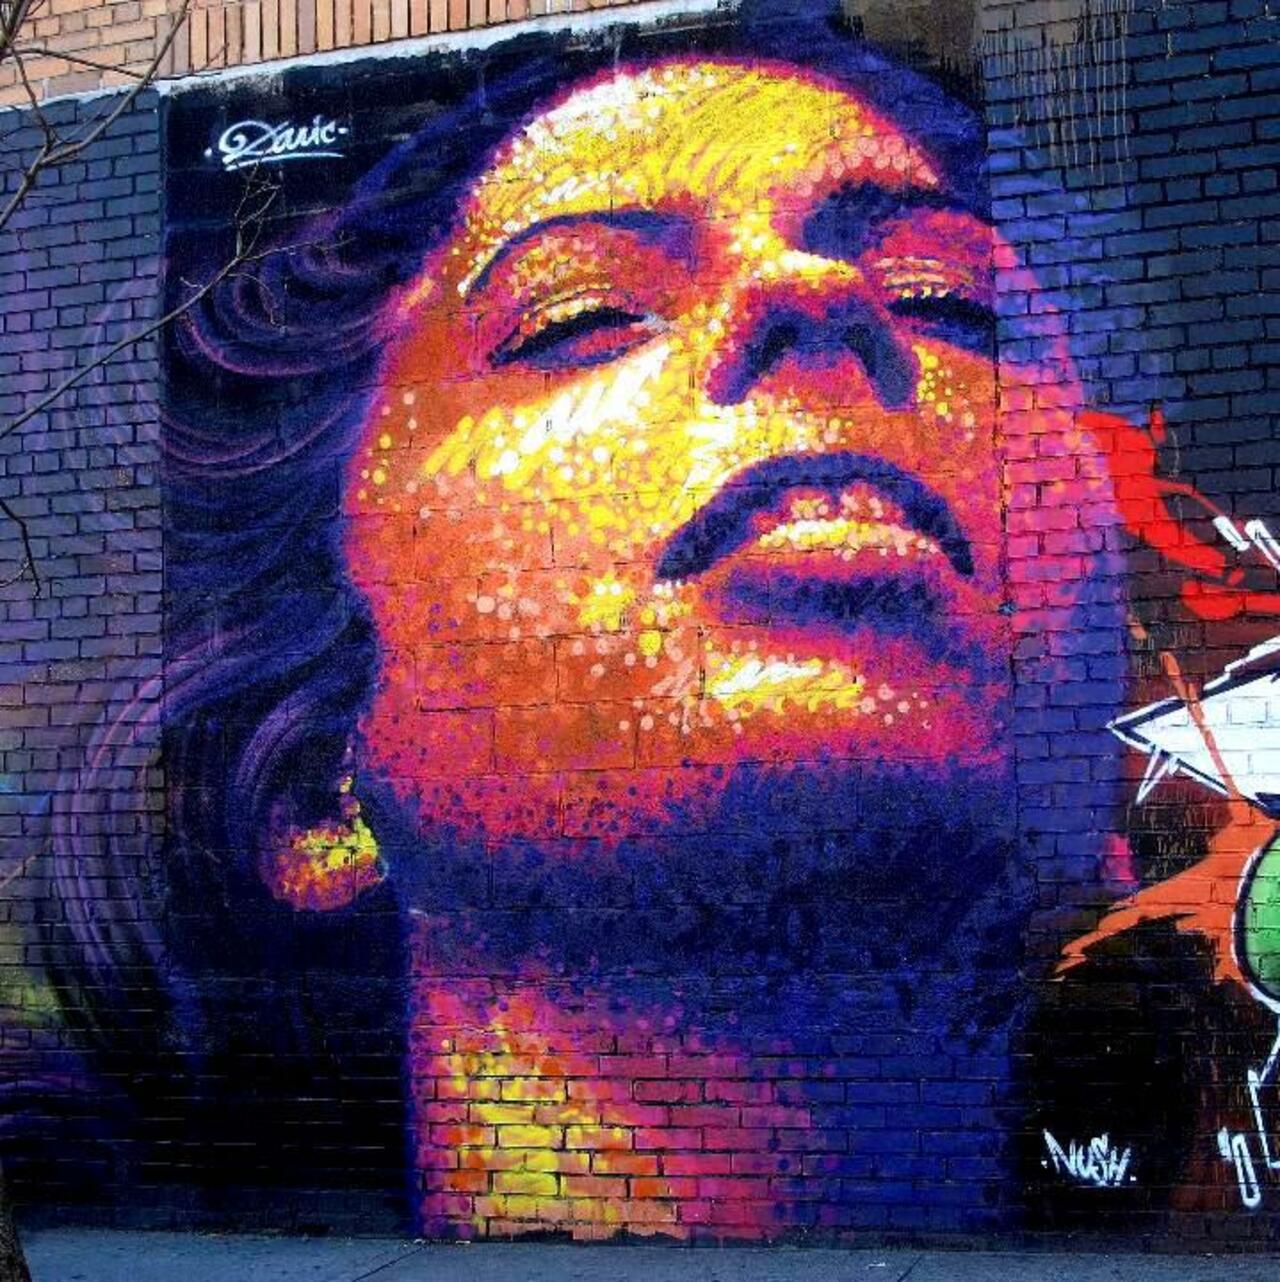 “@Pitchuskita: Dasic 
South Bronx
#streetart #art #graffiti #mural http://t.co/YmCeRCH3bG”